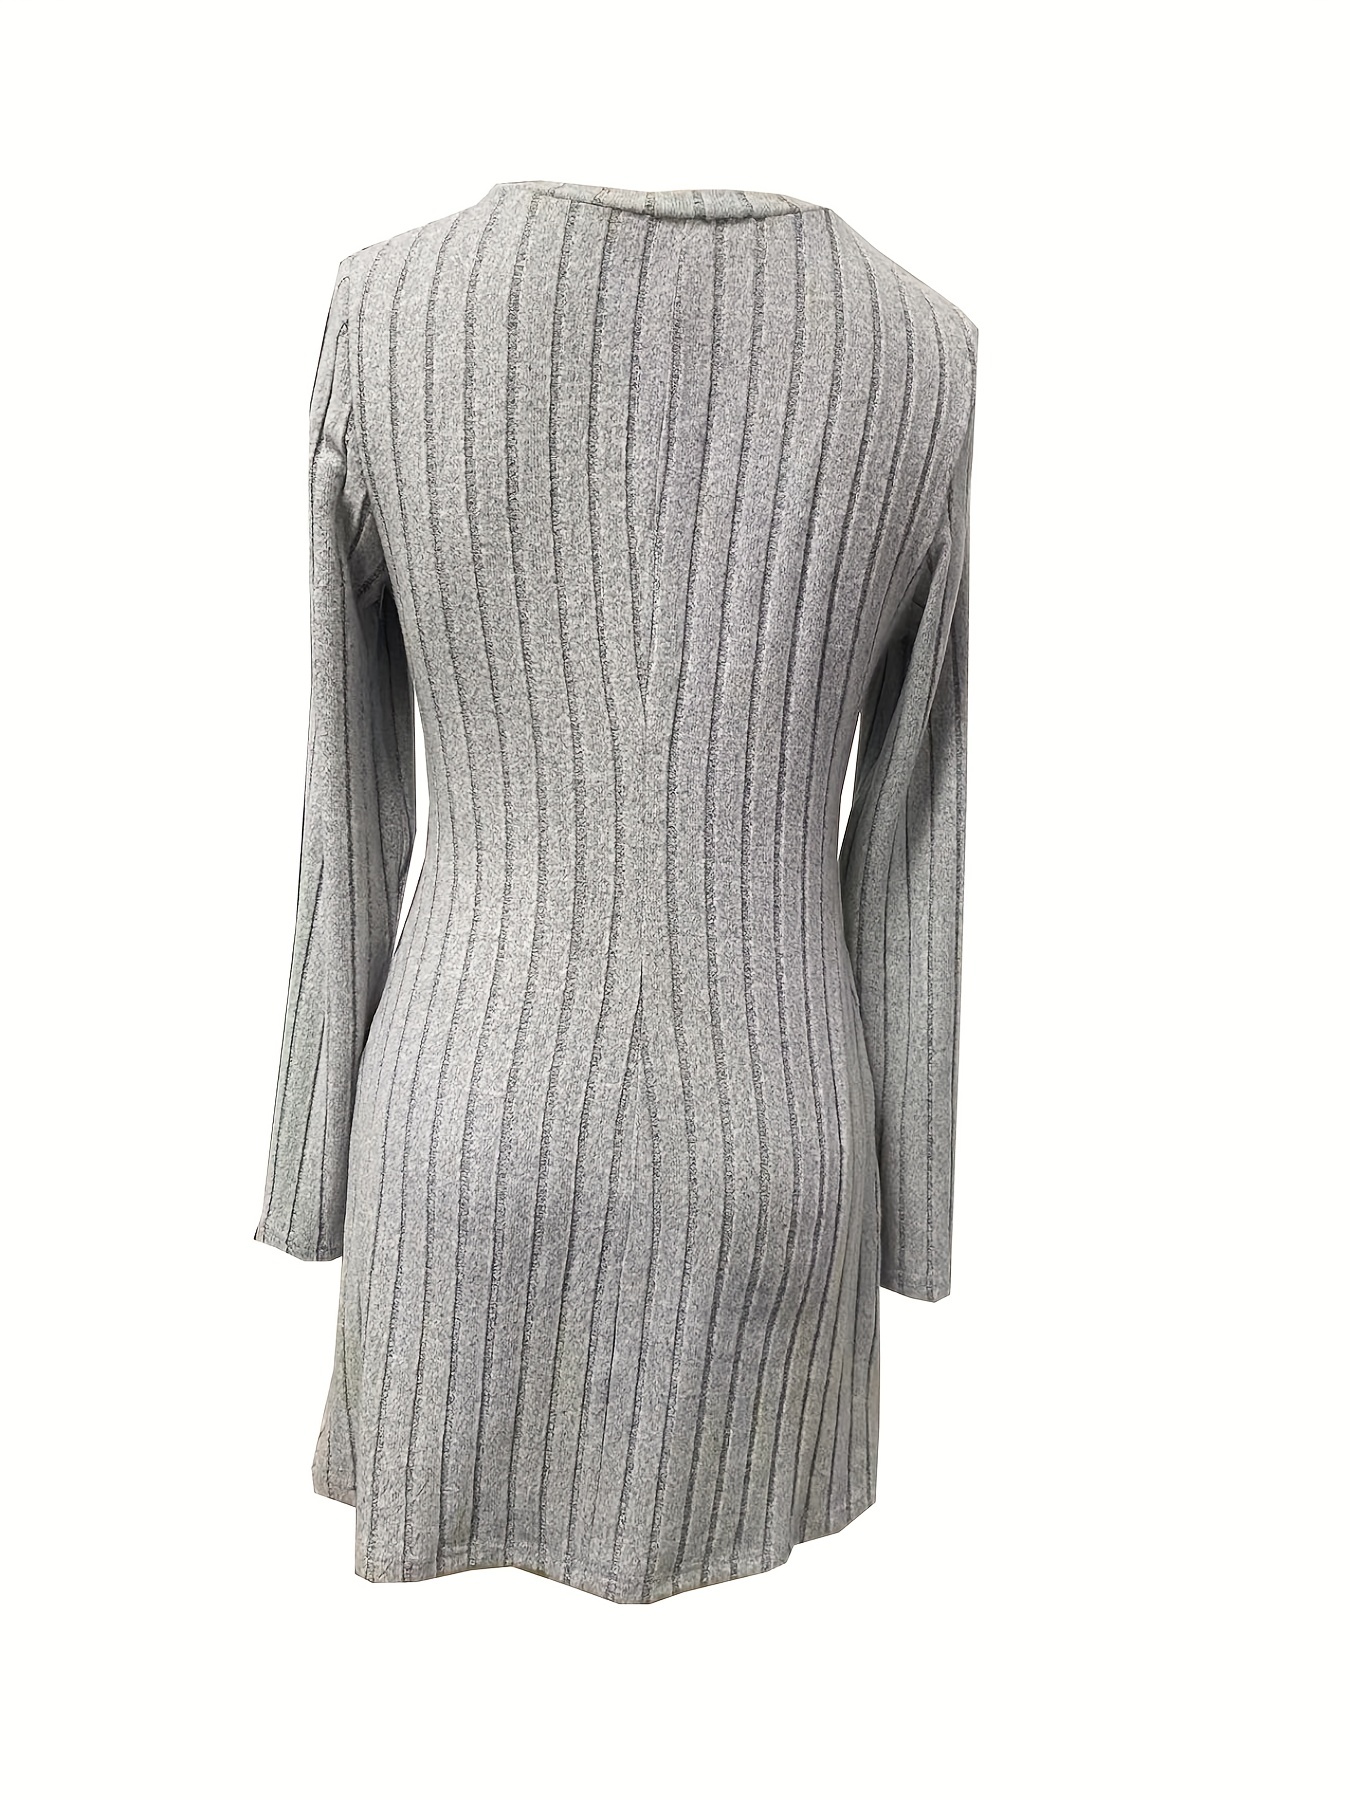 Ribbed Button Decor Asymmetrical Hem T-Shirt, Casual Long Sleeve Top For  Spring & Fall, Women's Clothing